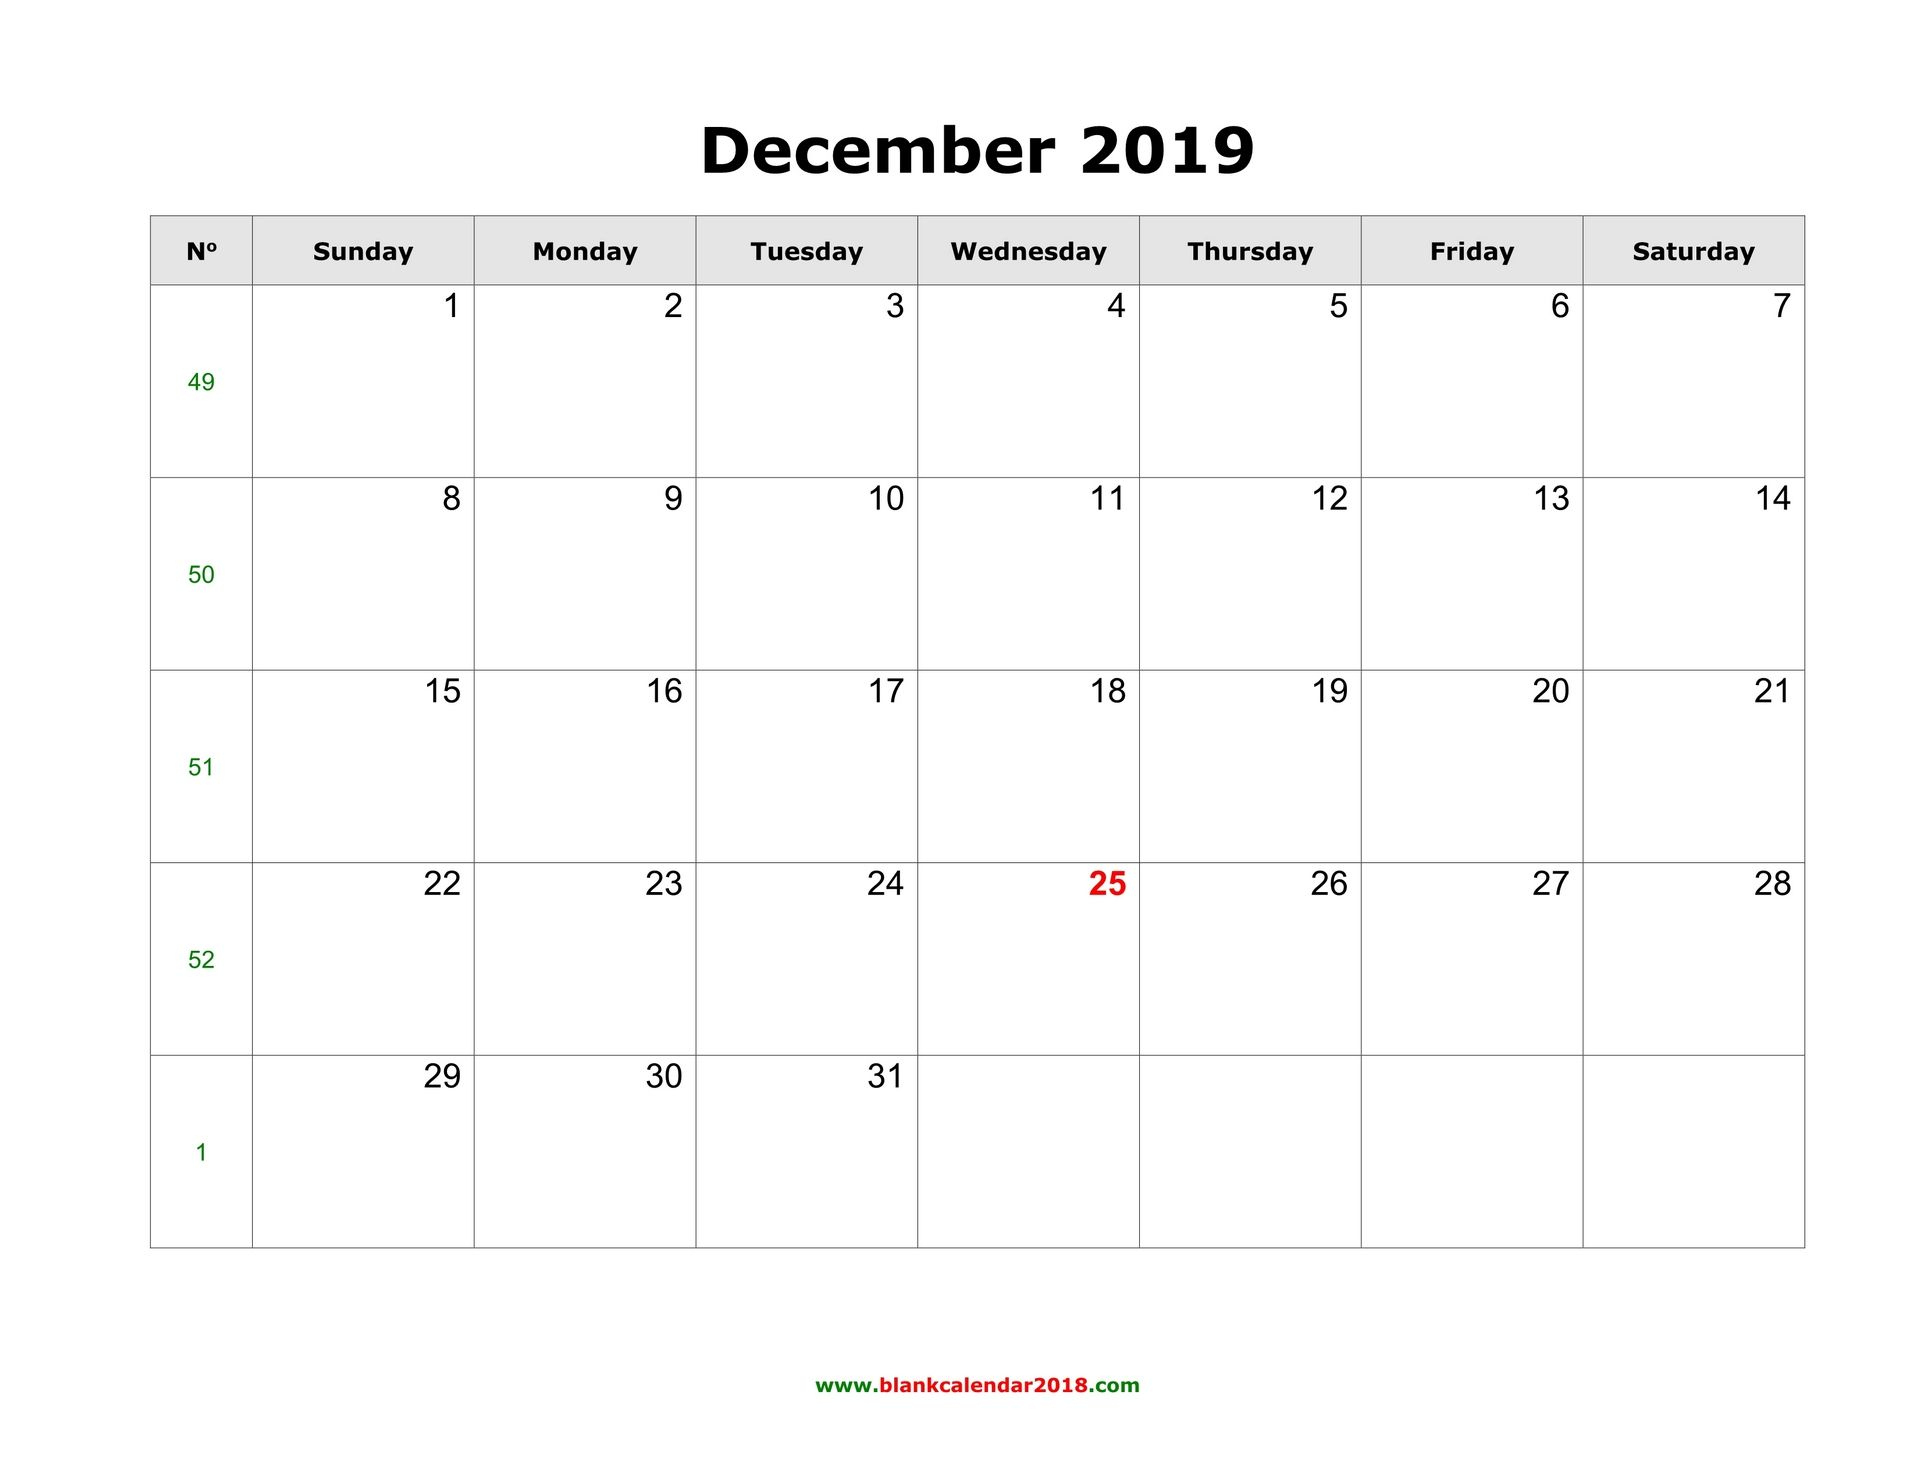 Calendar Template December 2019 Editable - Free Template